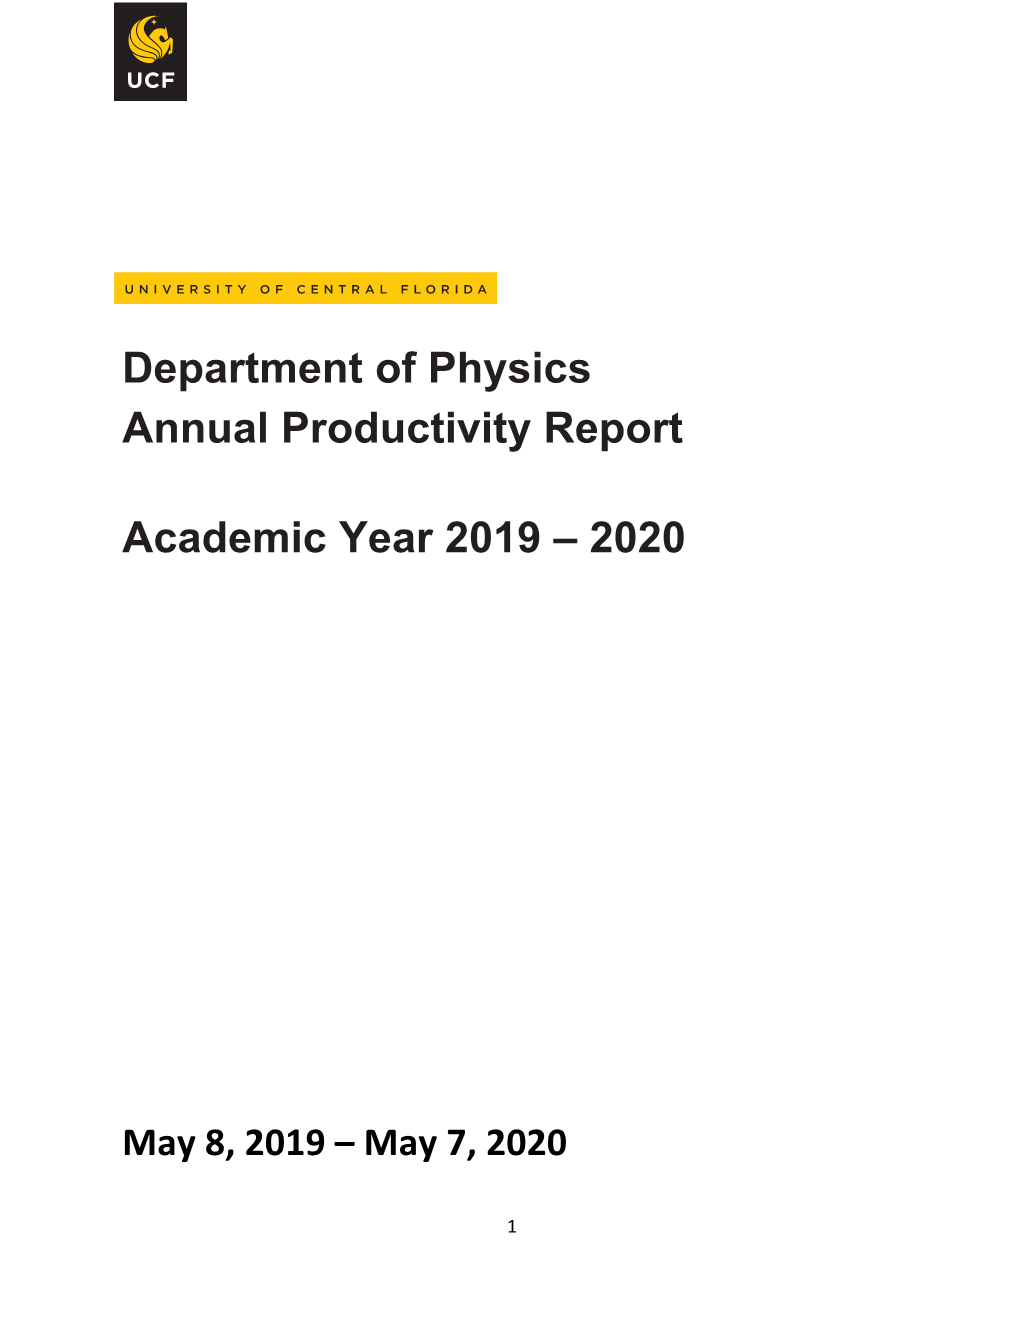 Annual Report Physics 2019-2020 NC Edited